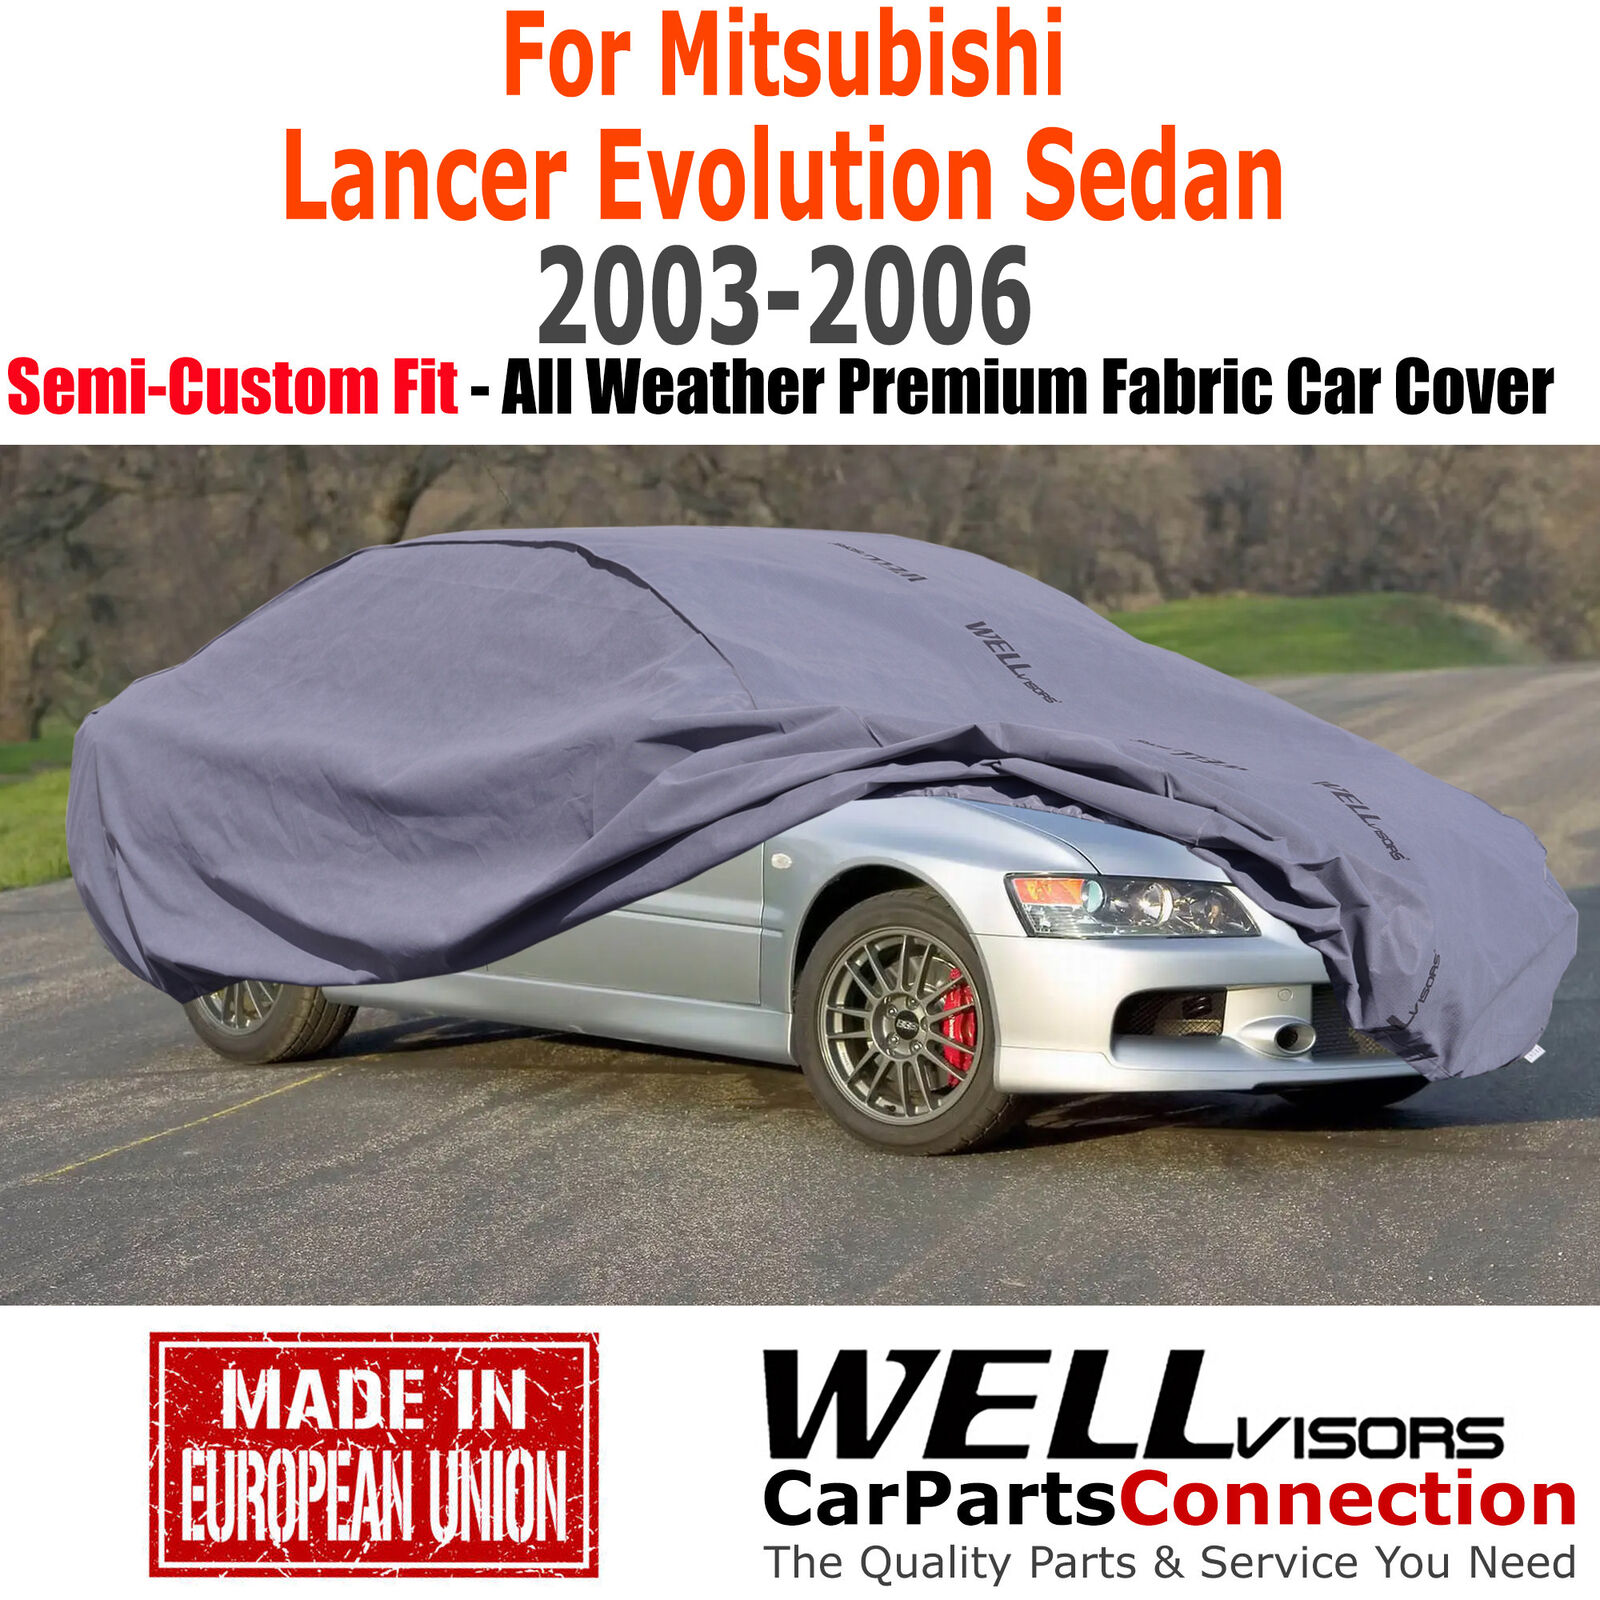 WellVisors All Weather Car Cover For 2003-2006 Mitsubishi Lancer Evolution Sedan